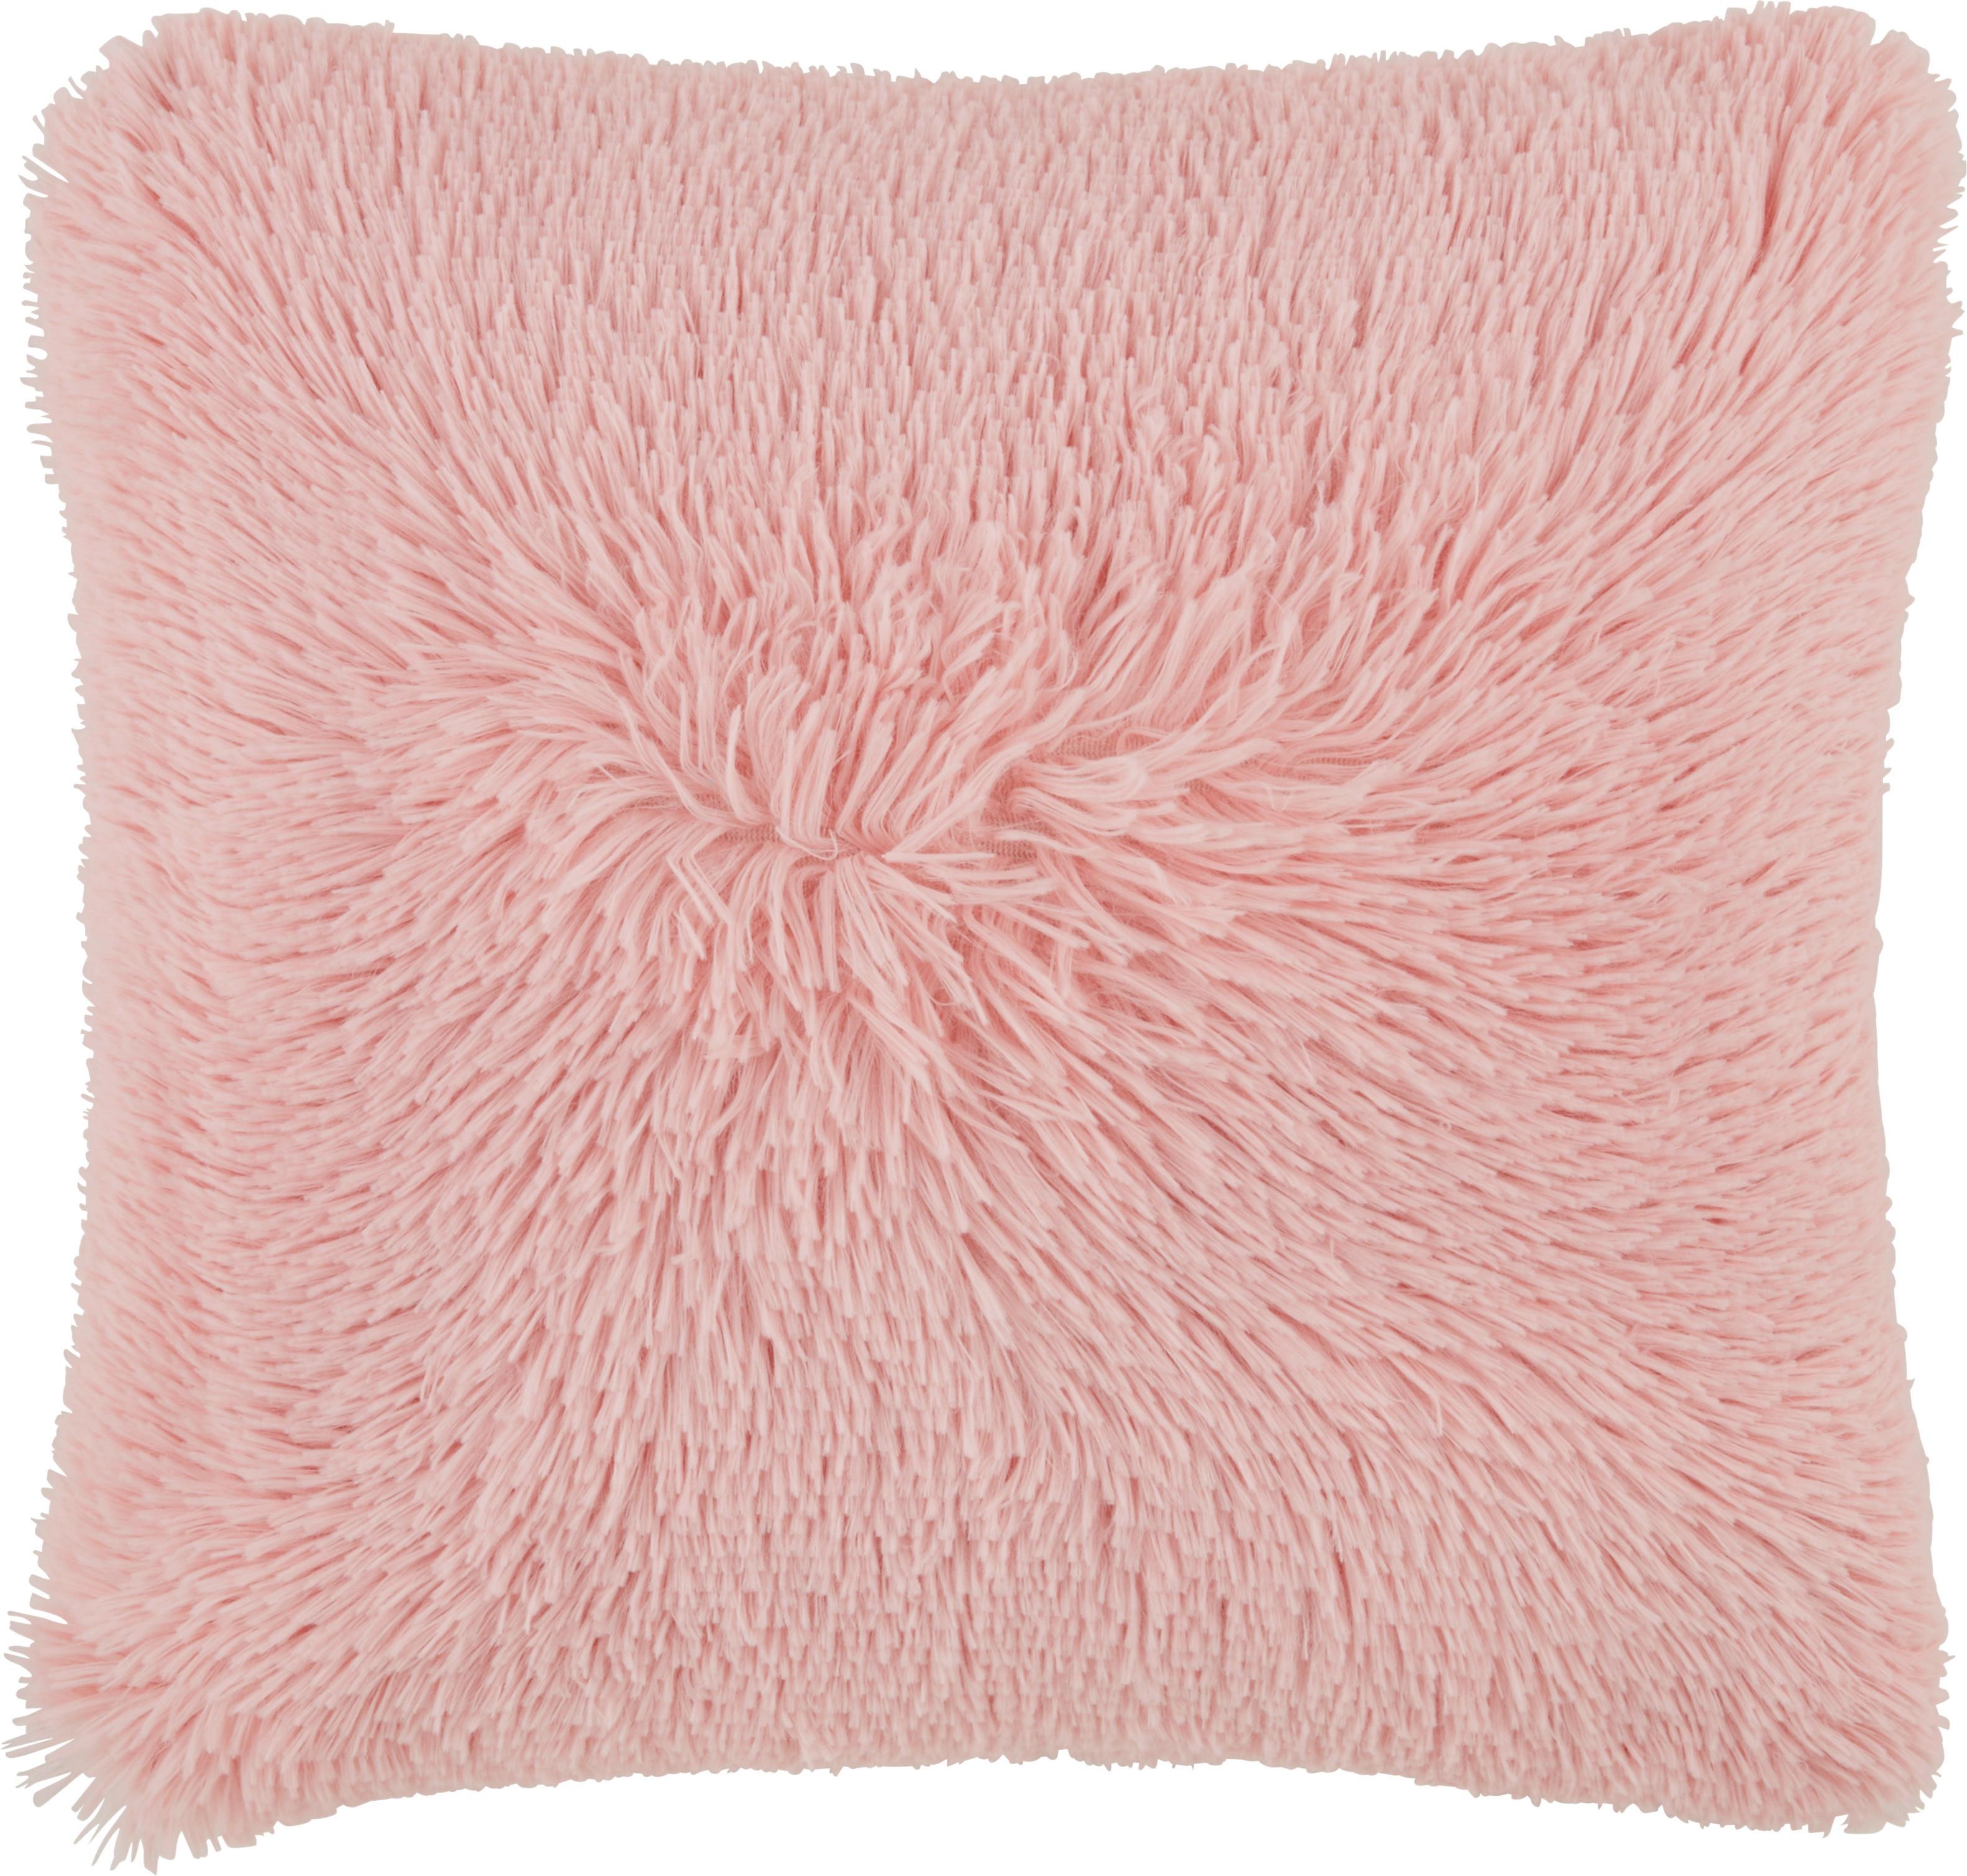 Zierkissen Fluffy in Rosa ca. 45x45cm - Rosa, Textil (45/45cm) - Modern Living